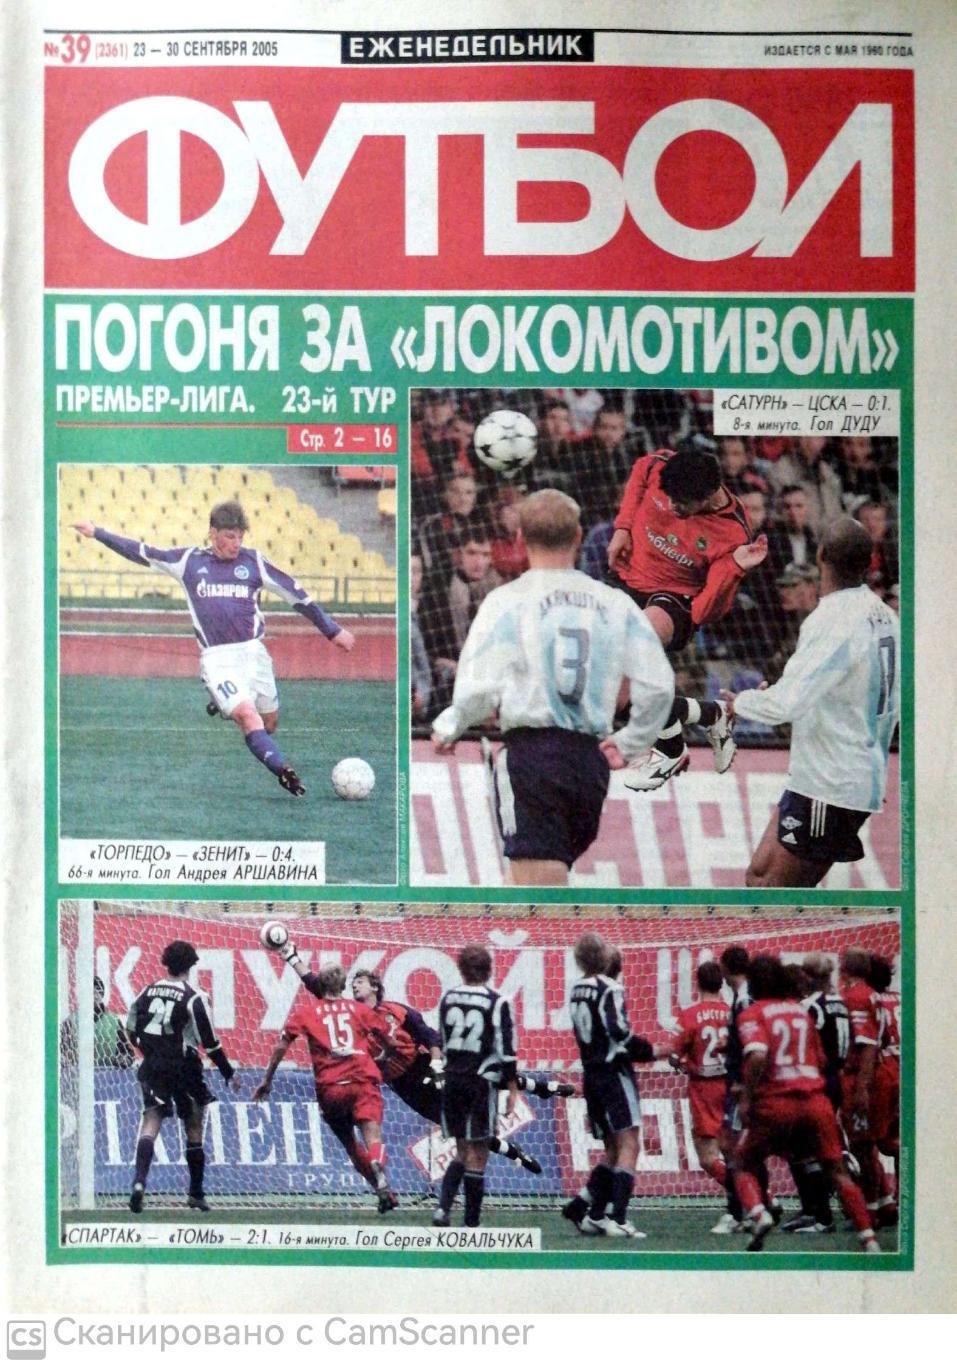 Еженедельник «Футбол» (Москва). 2005 год. №39